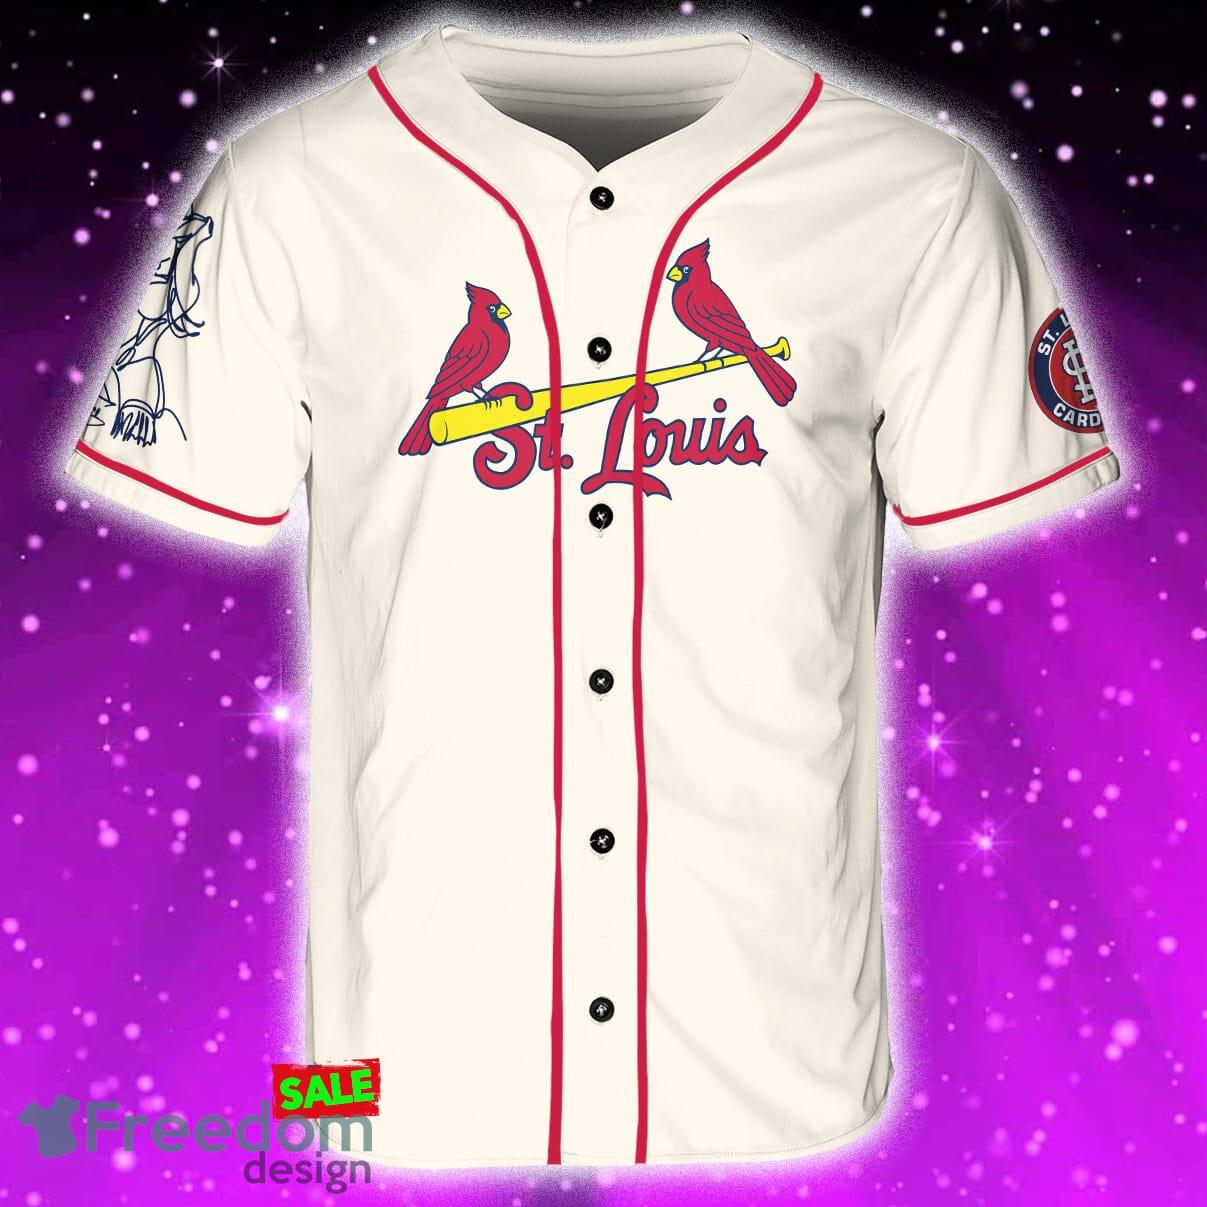 Chicago White Sox Beyonce Black Custom Number And Name Baseball Jersey Shirt  - Banantees